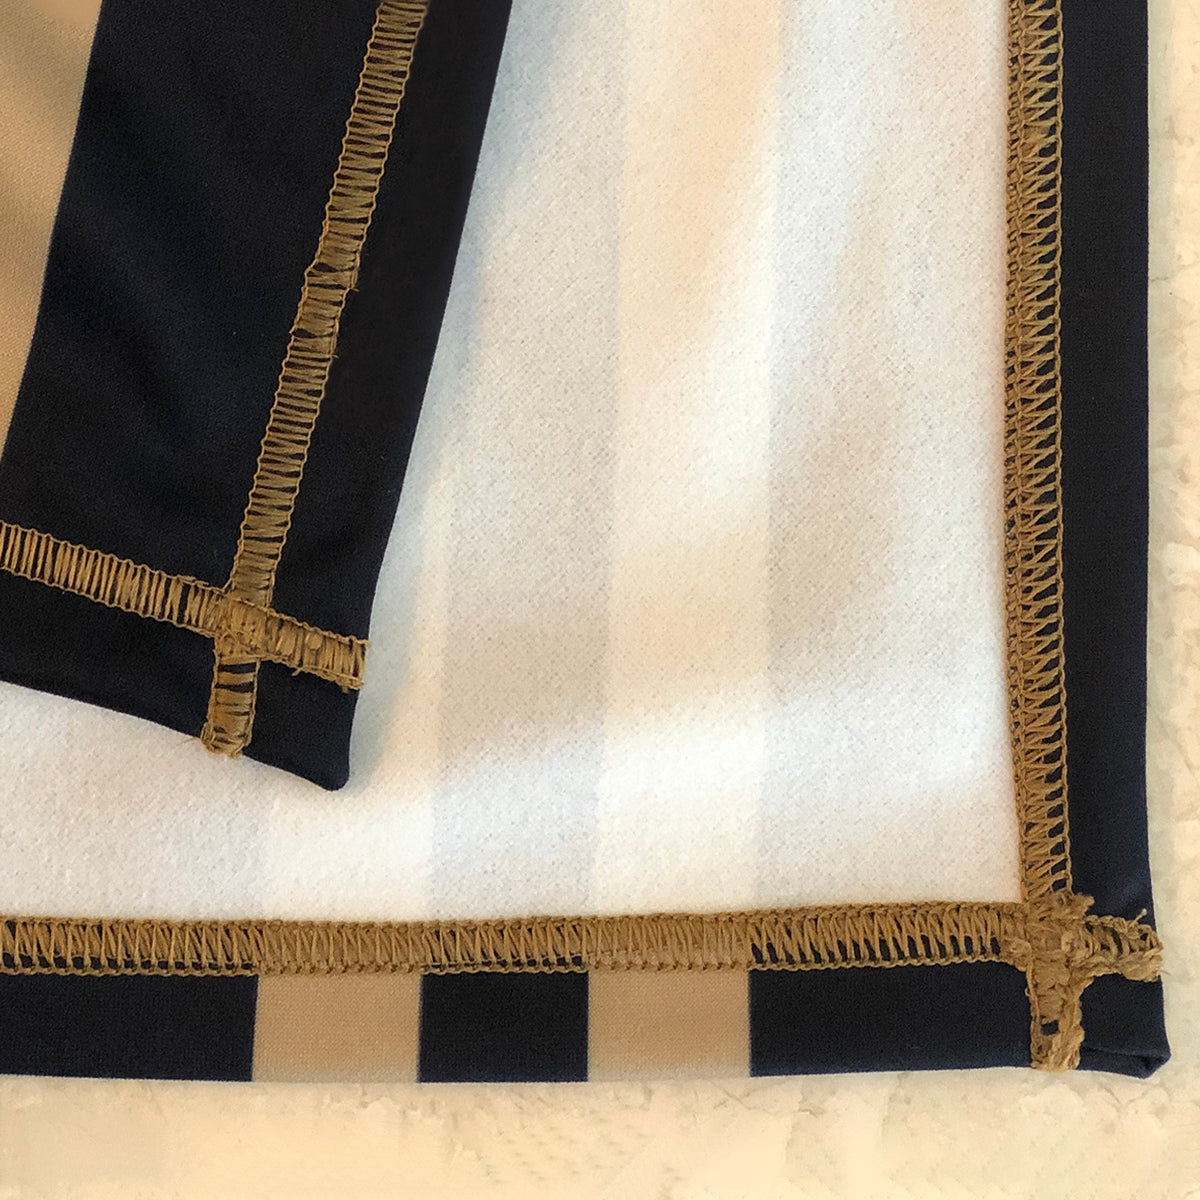 Duquesne Dukes Game Day Soft Premium Fleece Blue Throw Blanket 40 x 58 Logo and Stripes